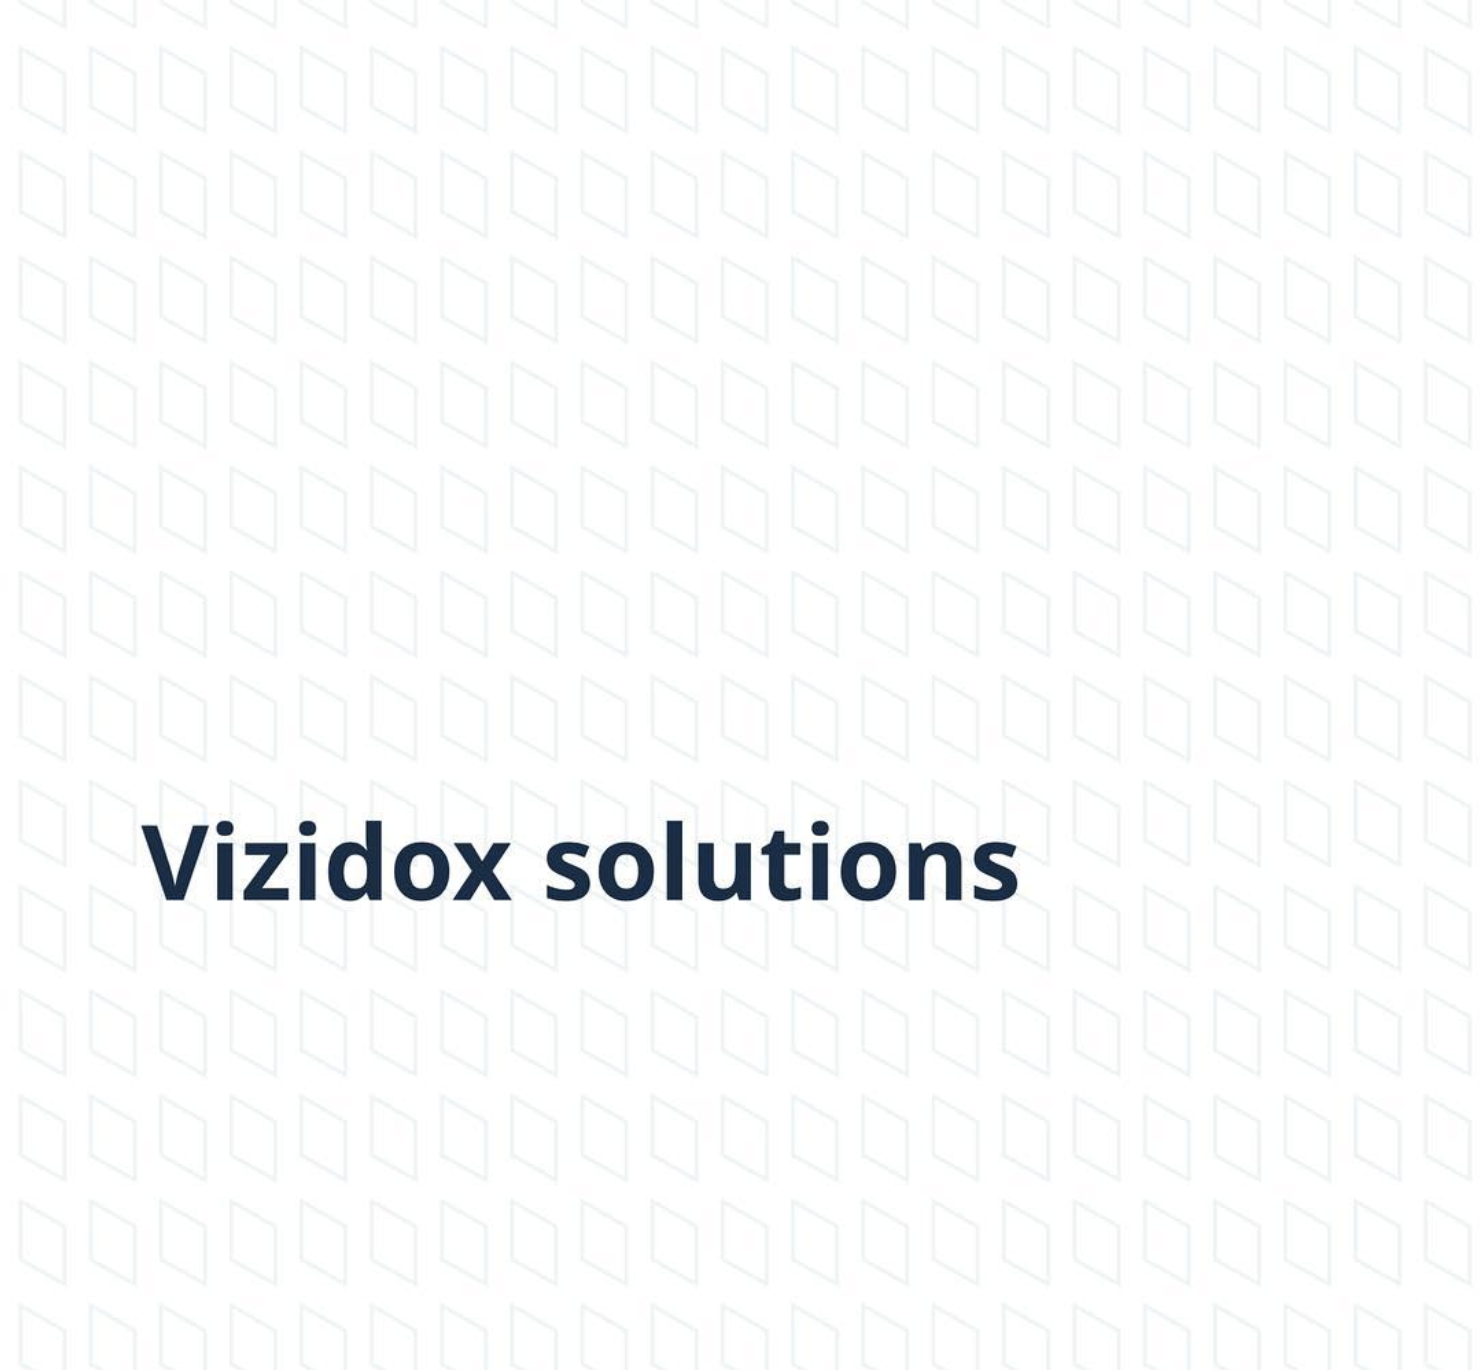 Vizidox Branding